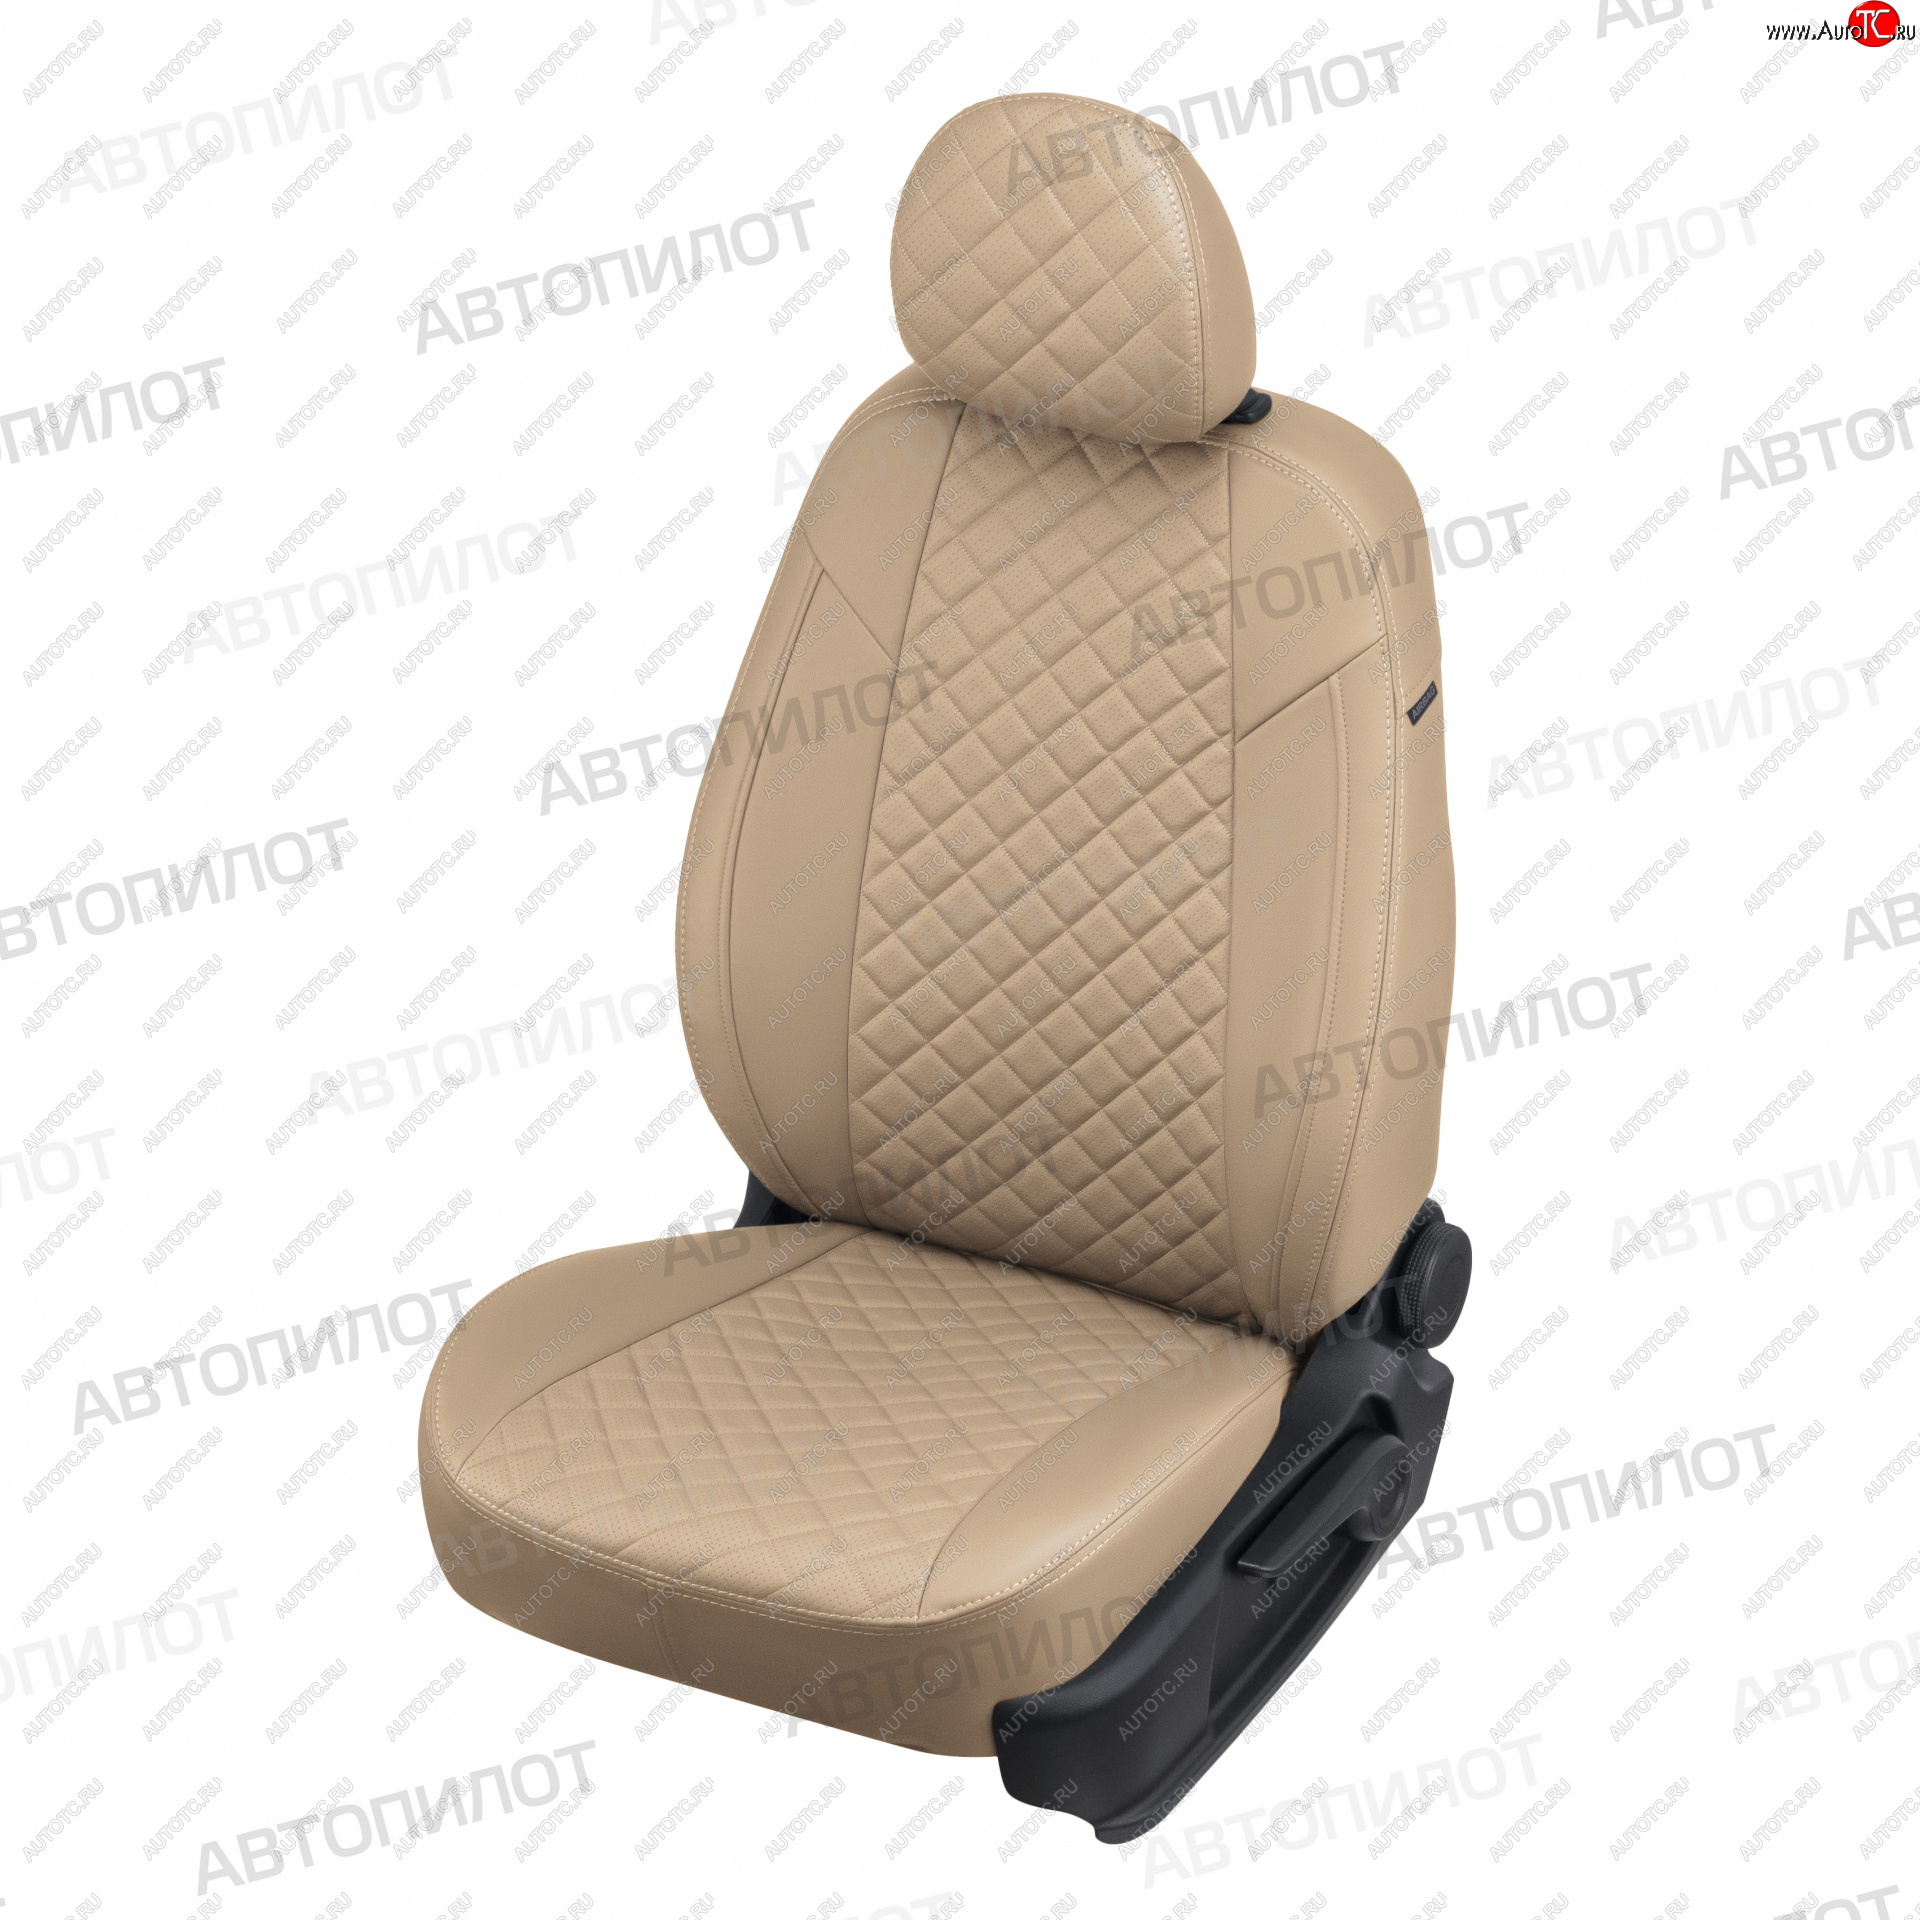 7 799 р. Чехлы сидений (экокожа) Автопилот Ромб  Ford Fusion  1 (2002-2012) (темно-бежевый)